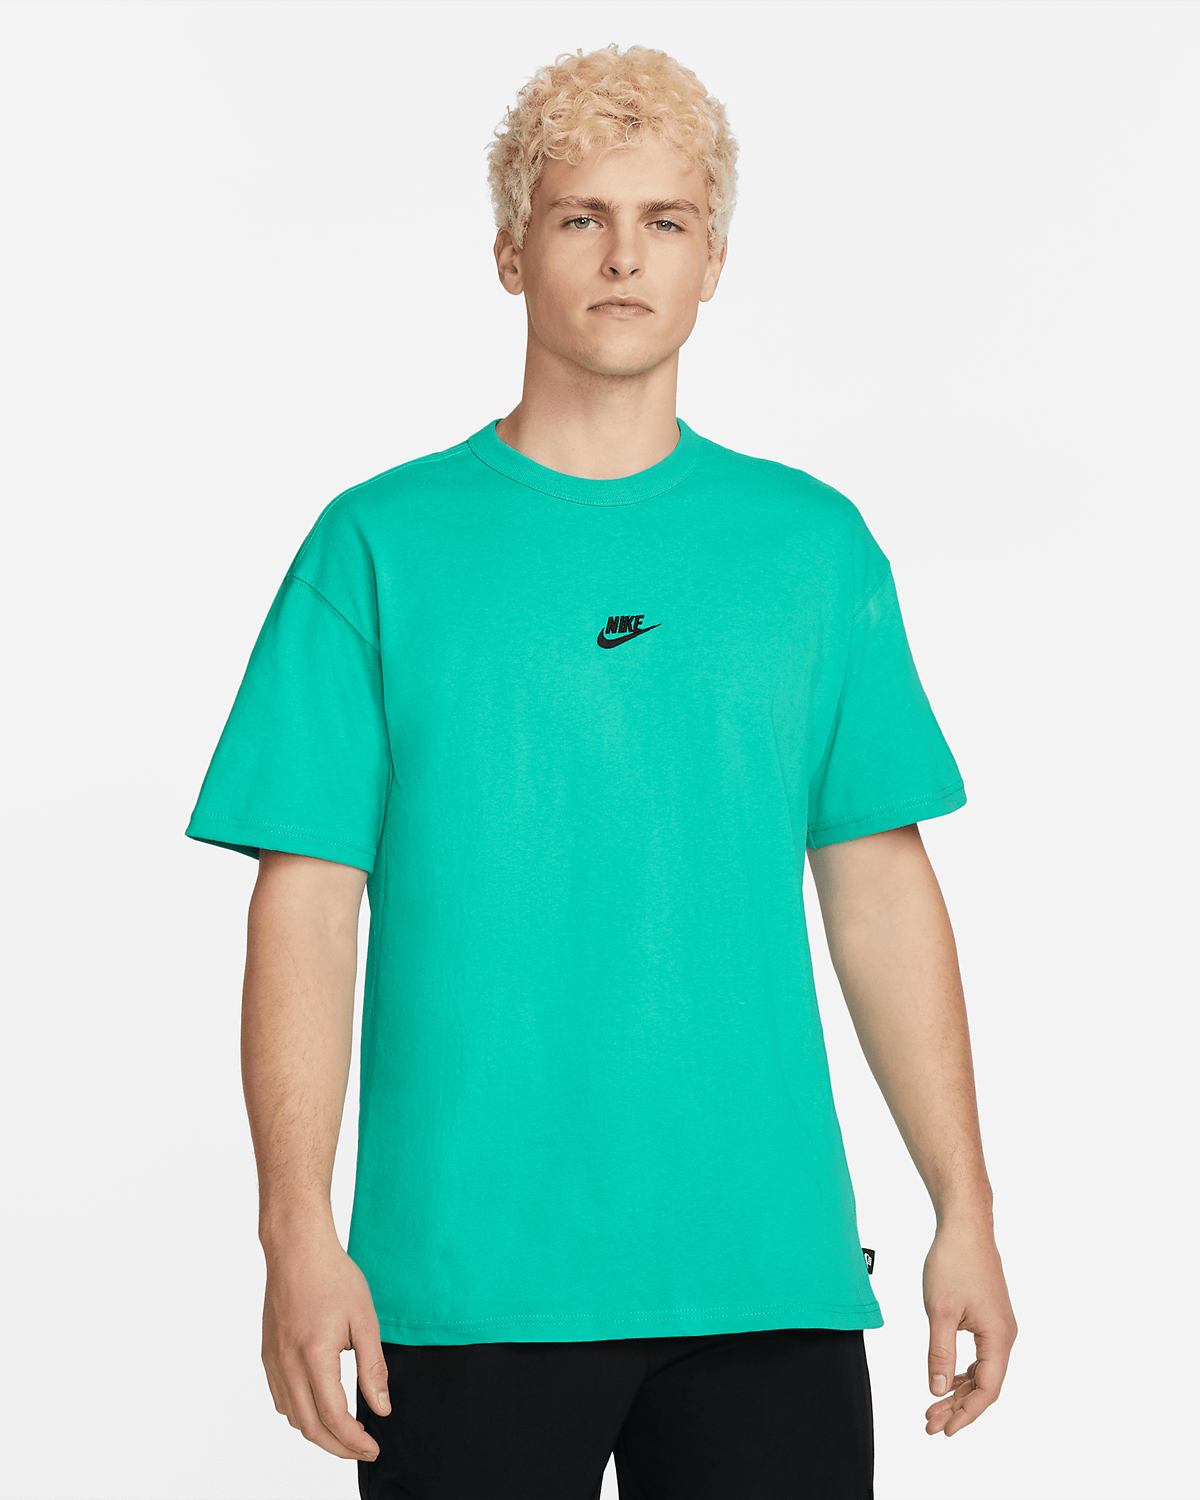 Nike-Air-Force-1-Low-Tiffany-Shirt